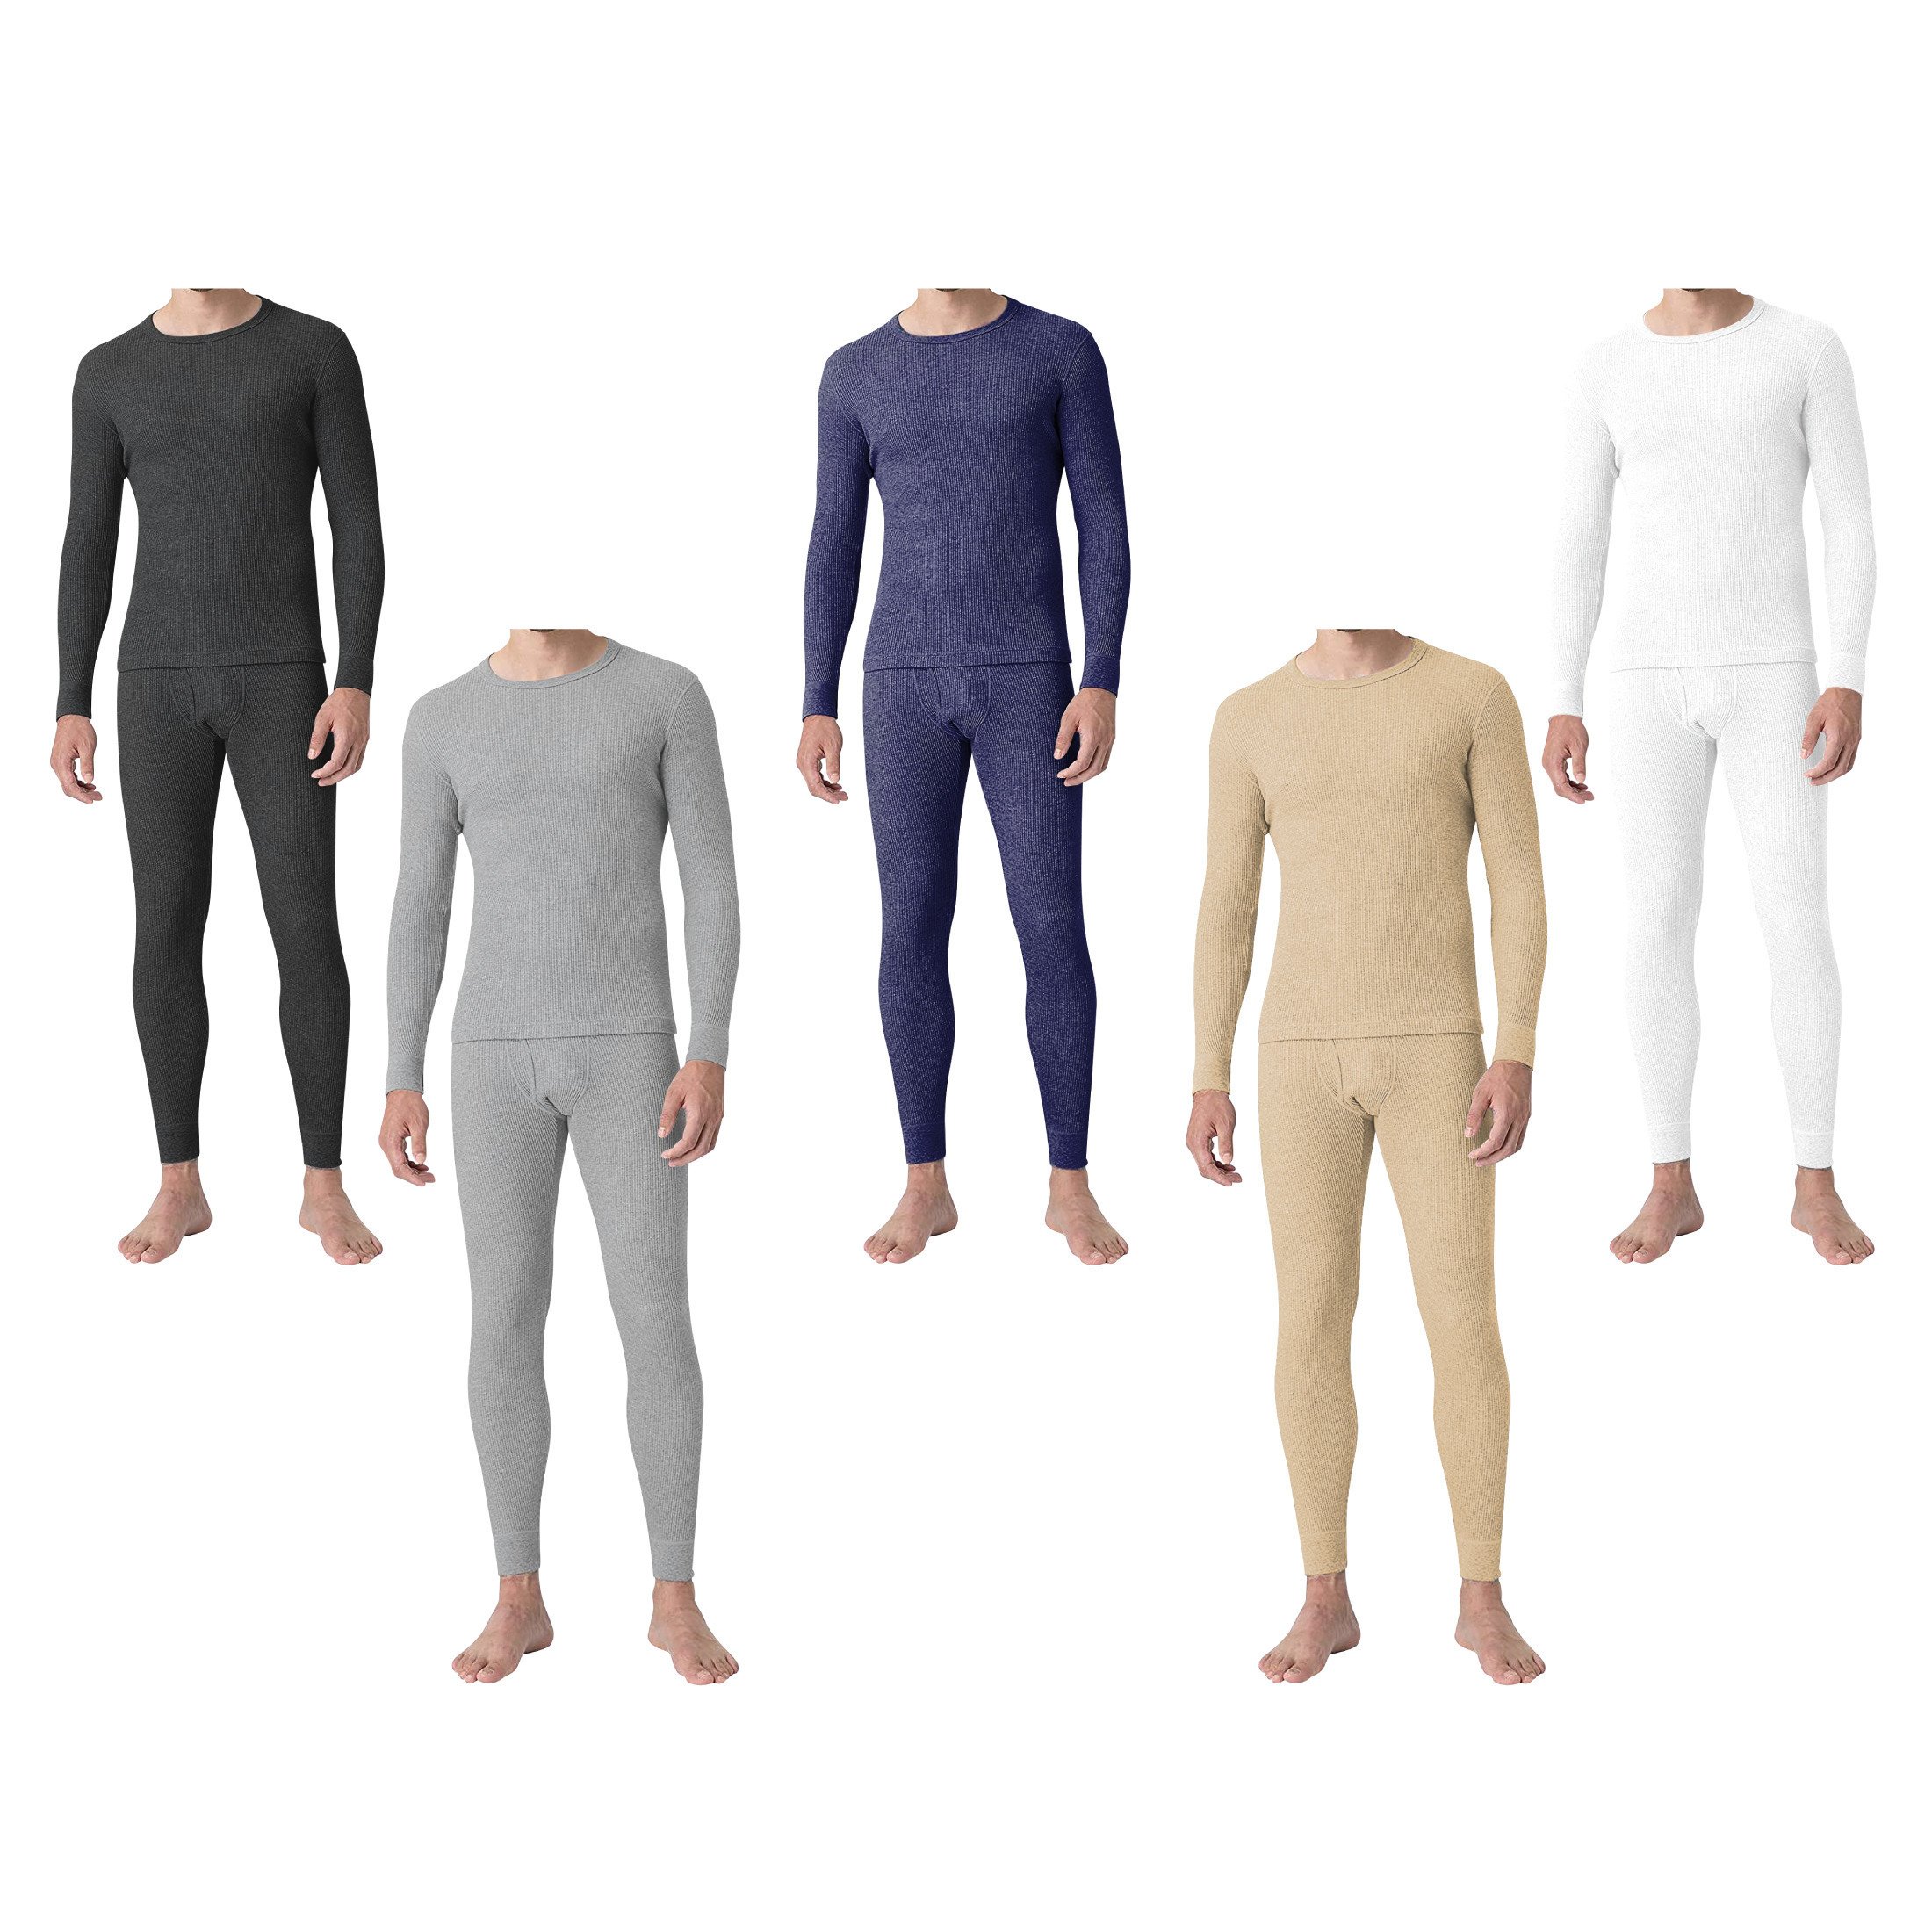 2-Sets: Men's Super Soft Cotton Waffle Knit Winter Thermal Underwear Set - Black & Navy, 2X-Large